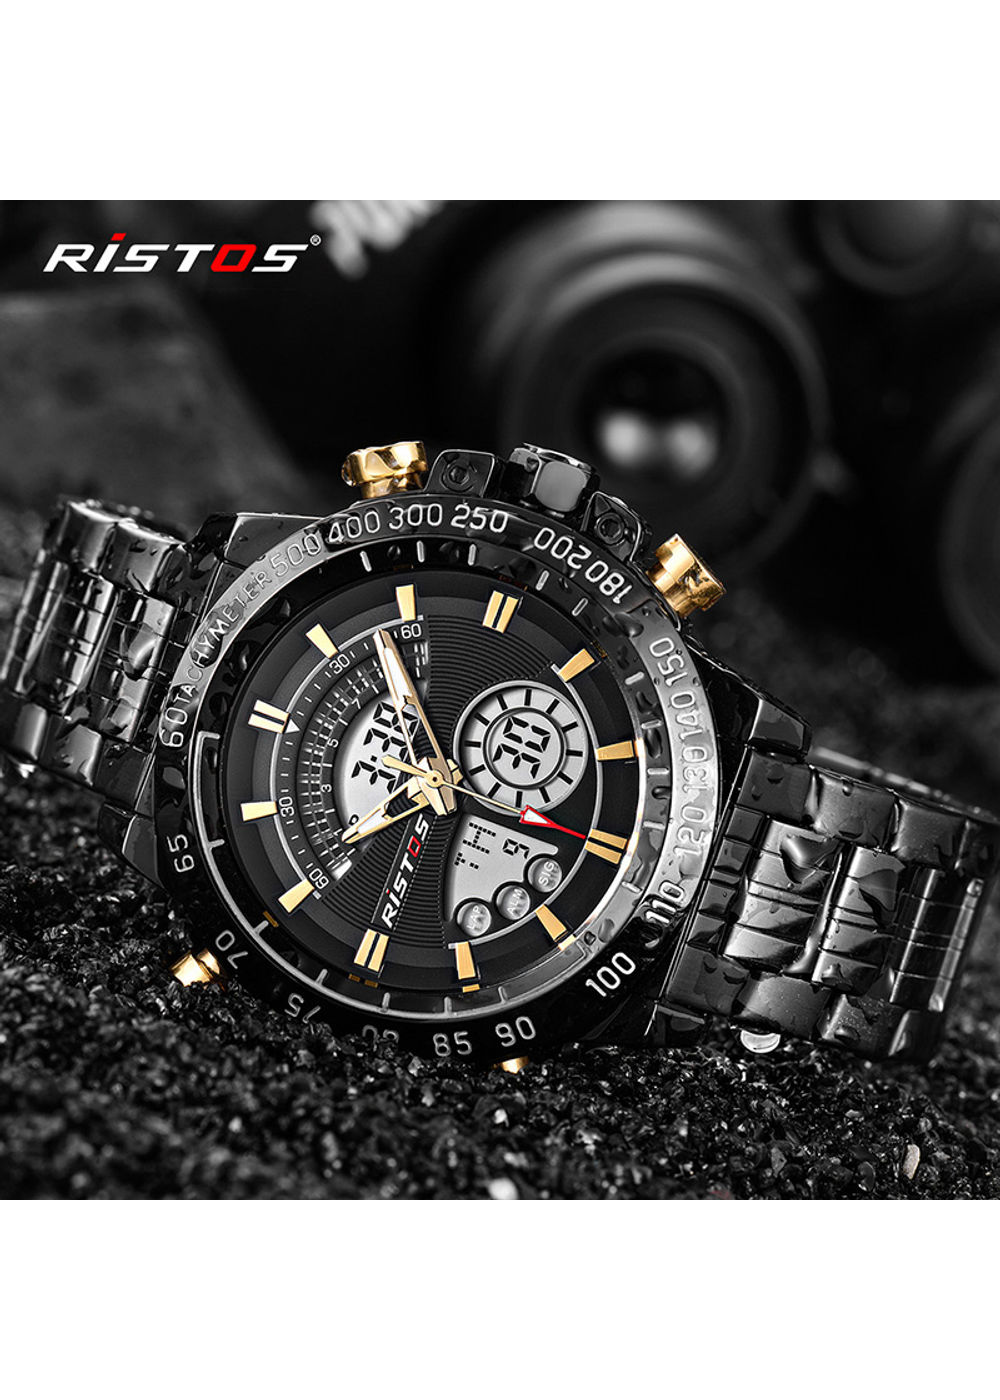 Ristos Chronograph Multifunction Men's Sport Stainless Steel Watches Analog  Fashion Wristwatch Relojes Masculino Military 9339 - AliExpress